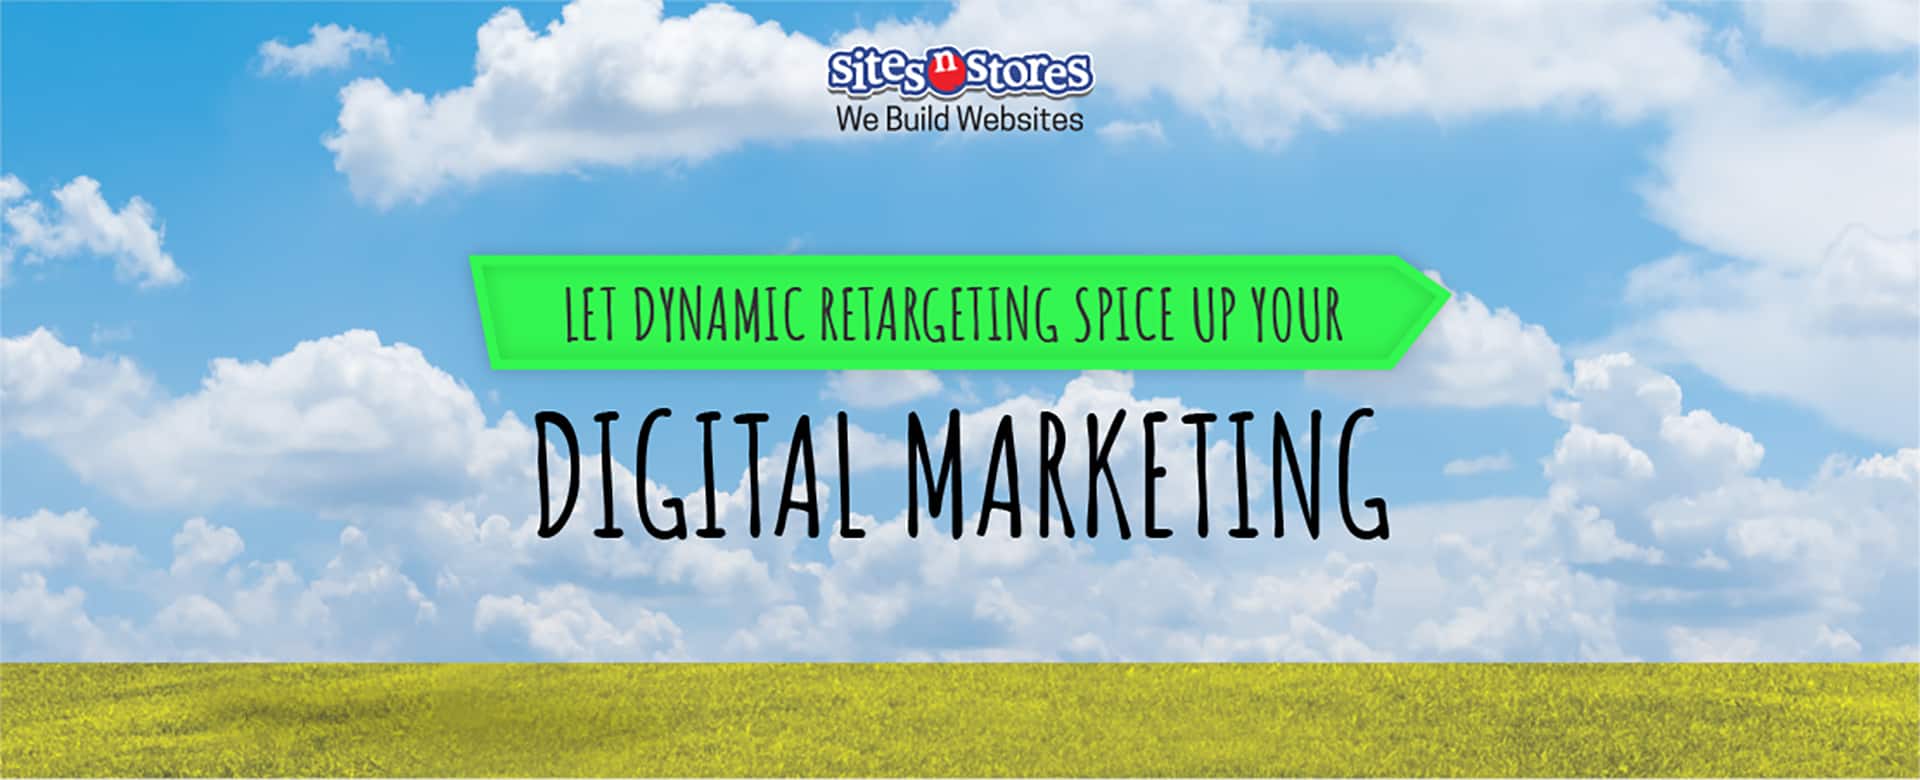 Let Dynamic Retargeting Spice Up Your Digital Marketing